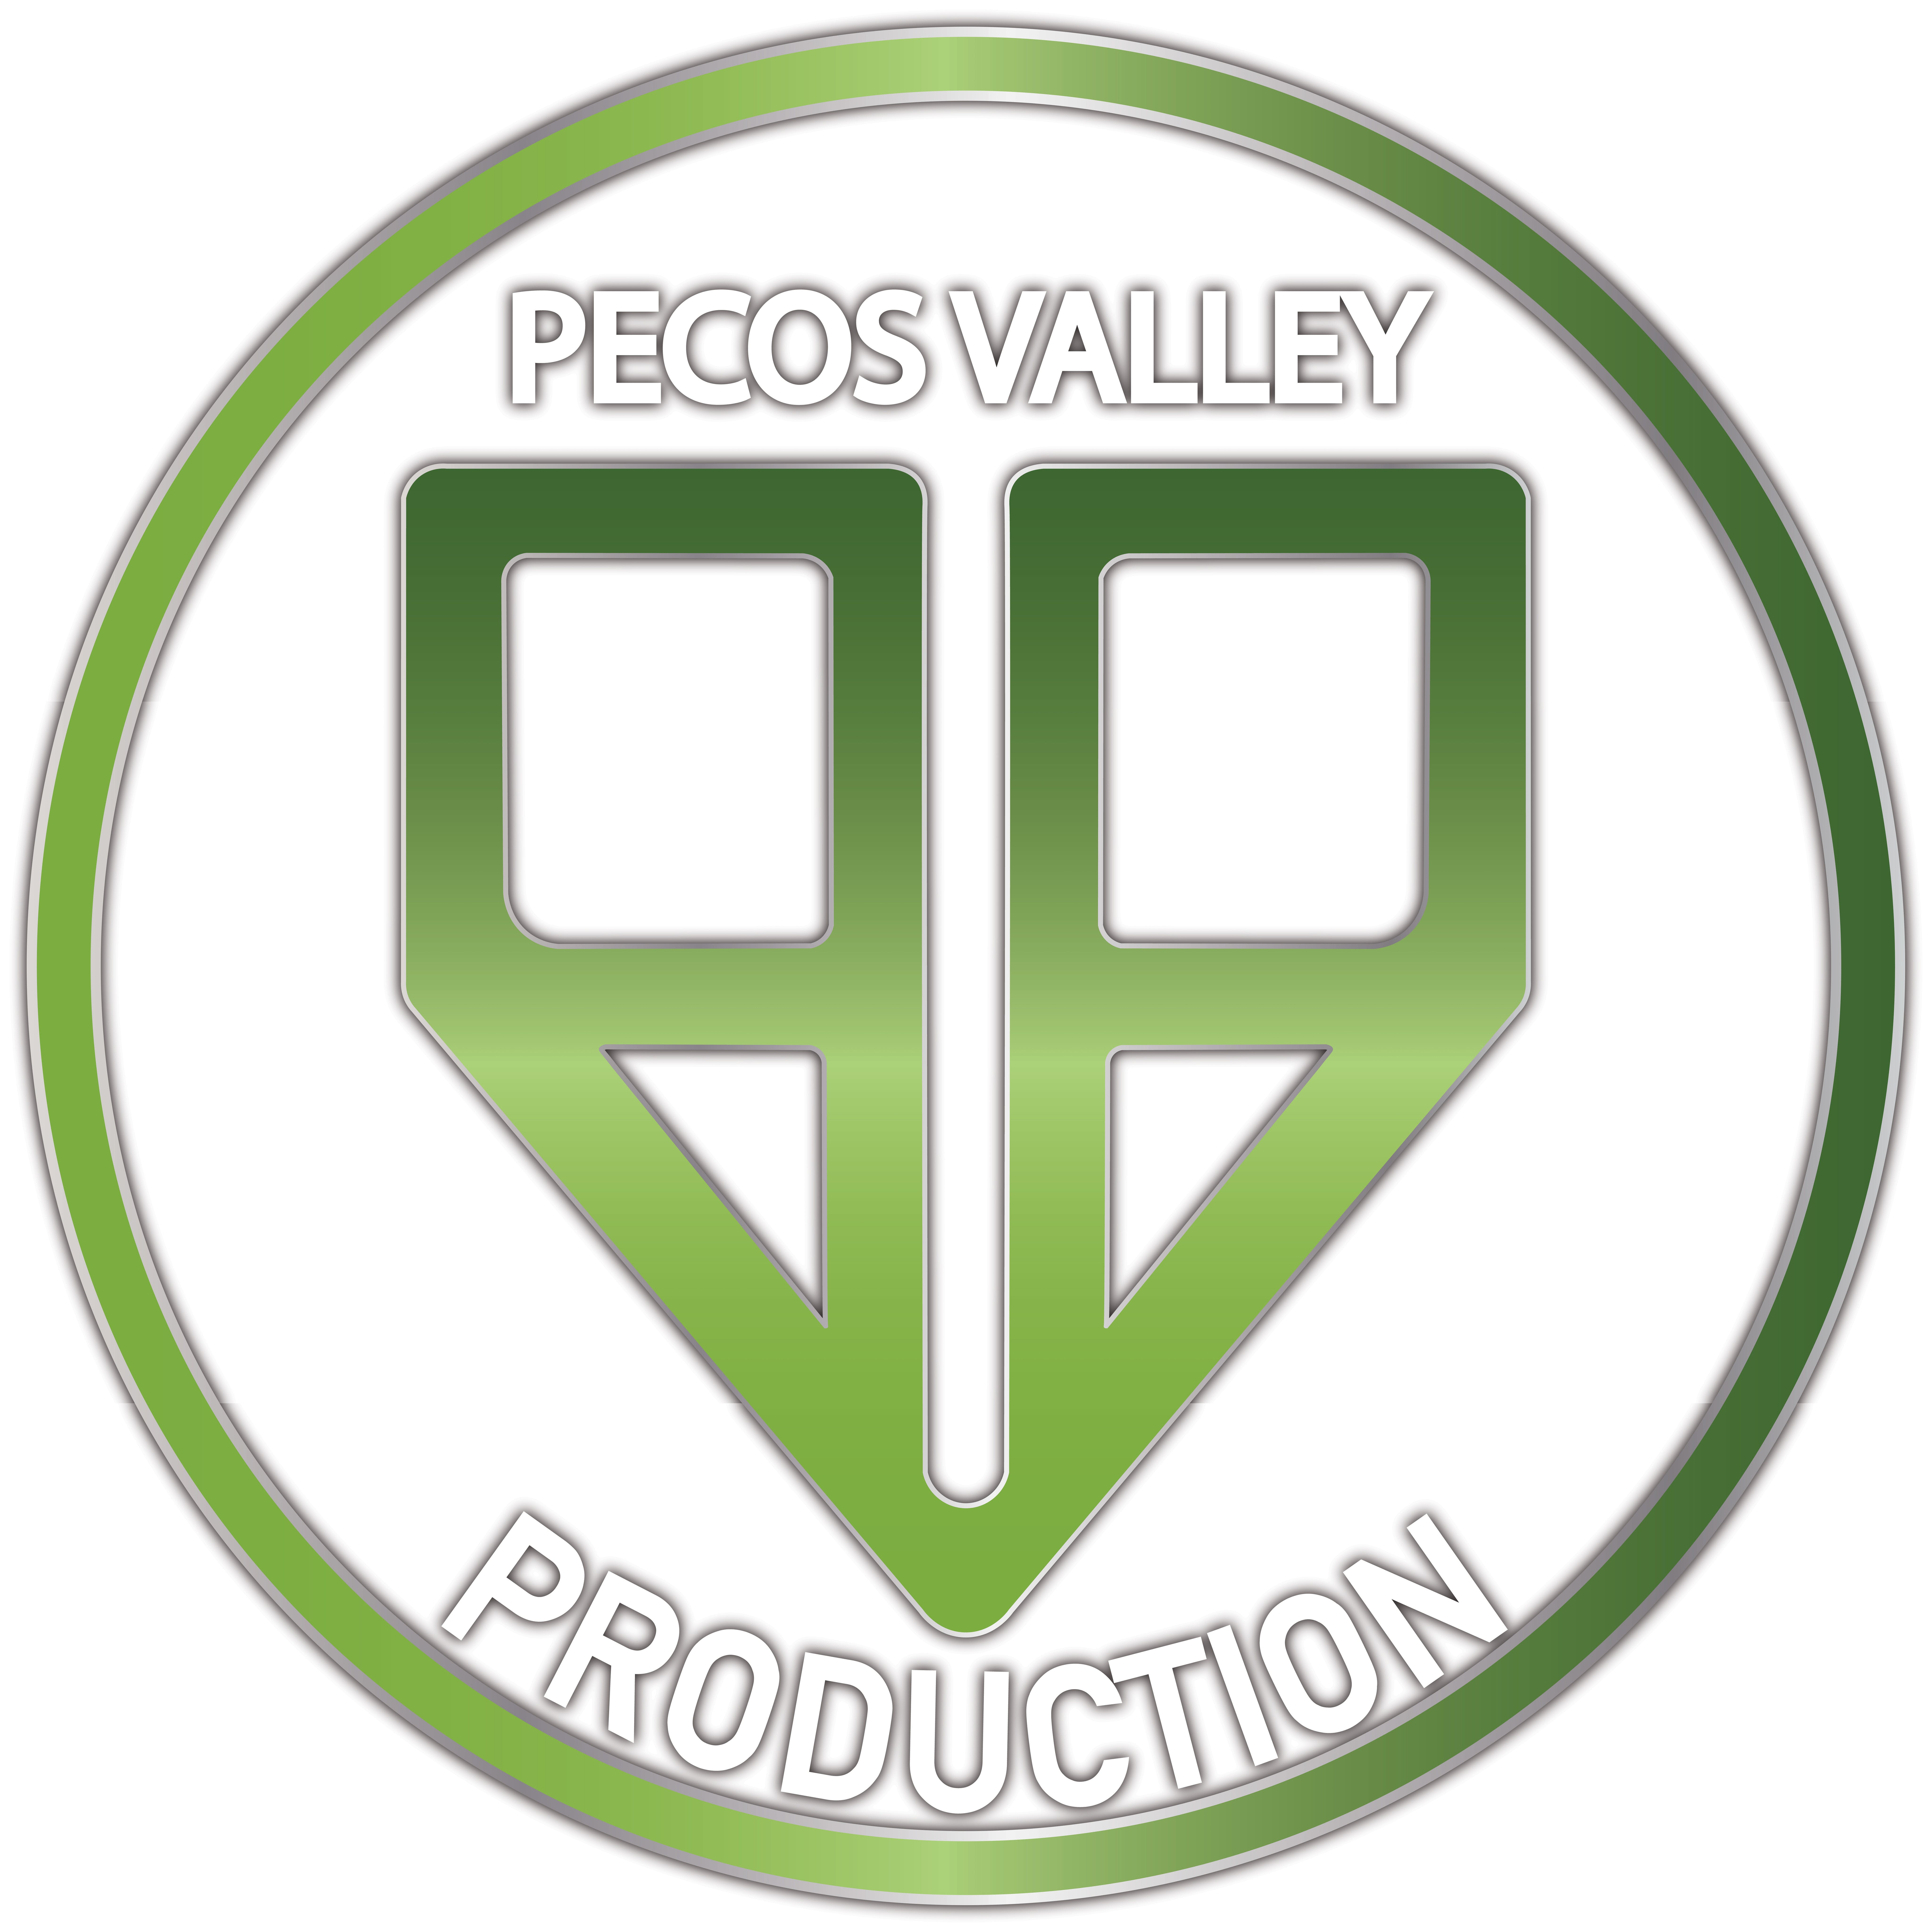 Pecos Valley Production - Medical Marijuana Doctors - Cannabizme.com